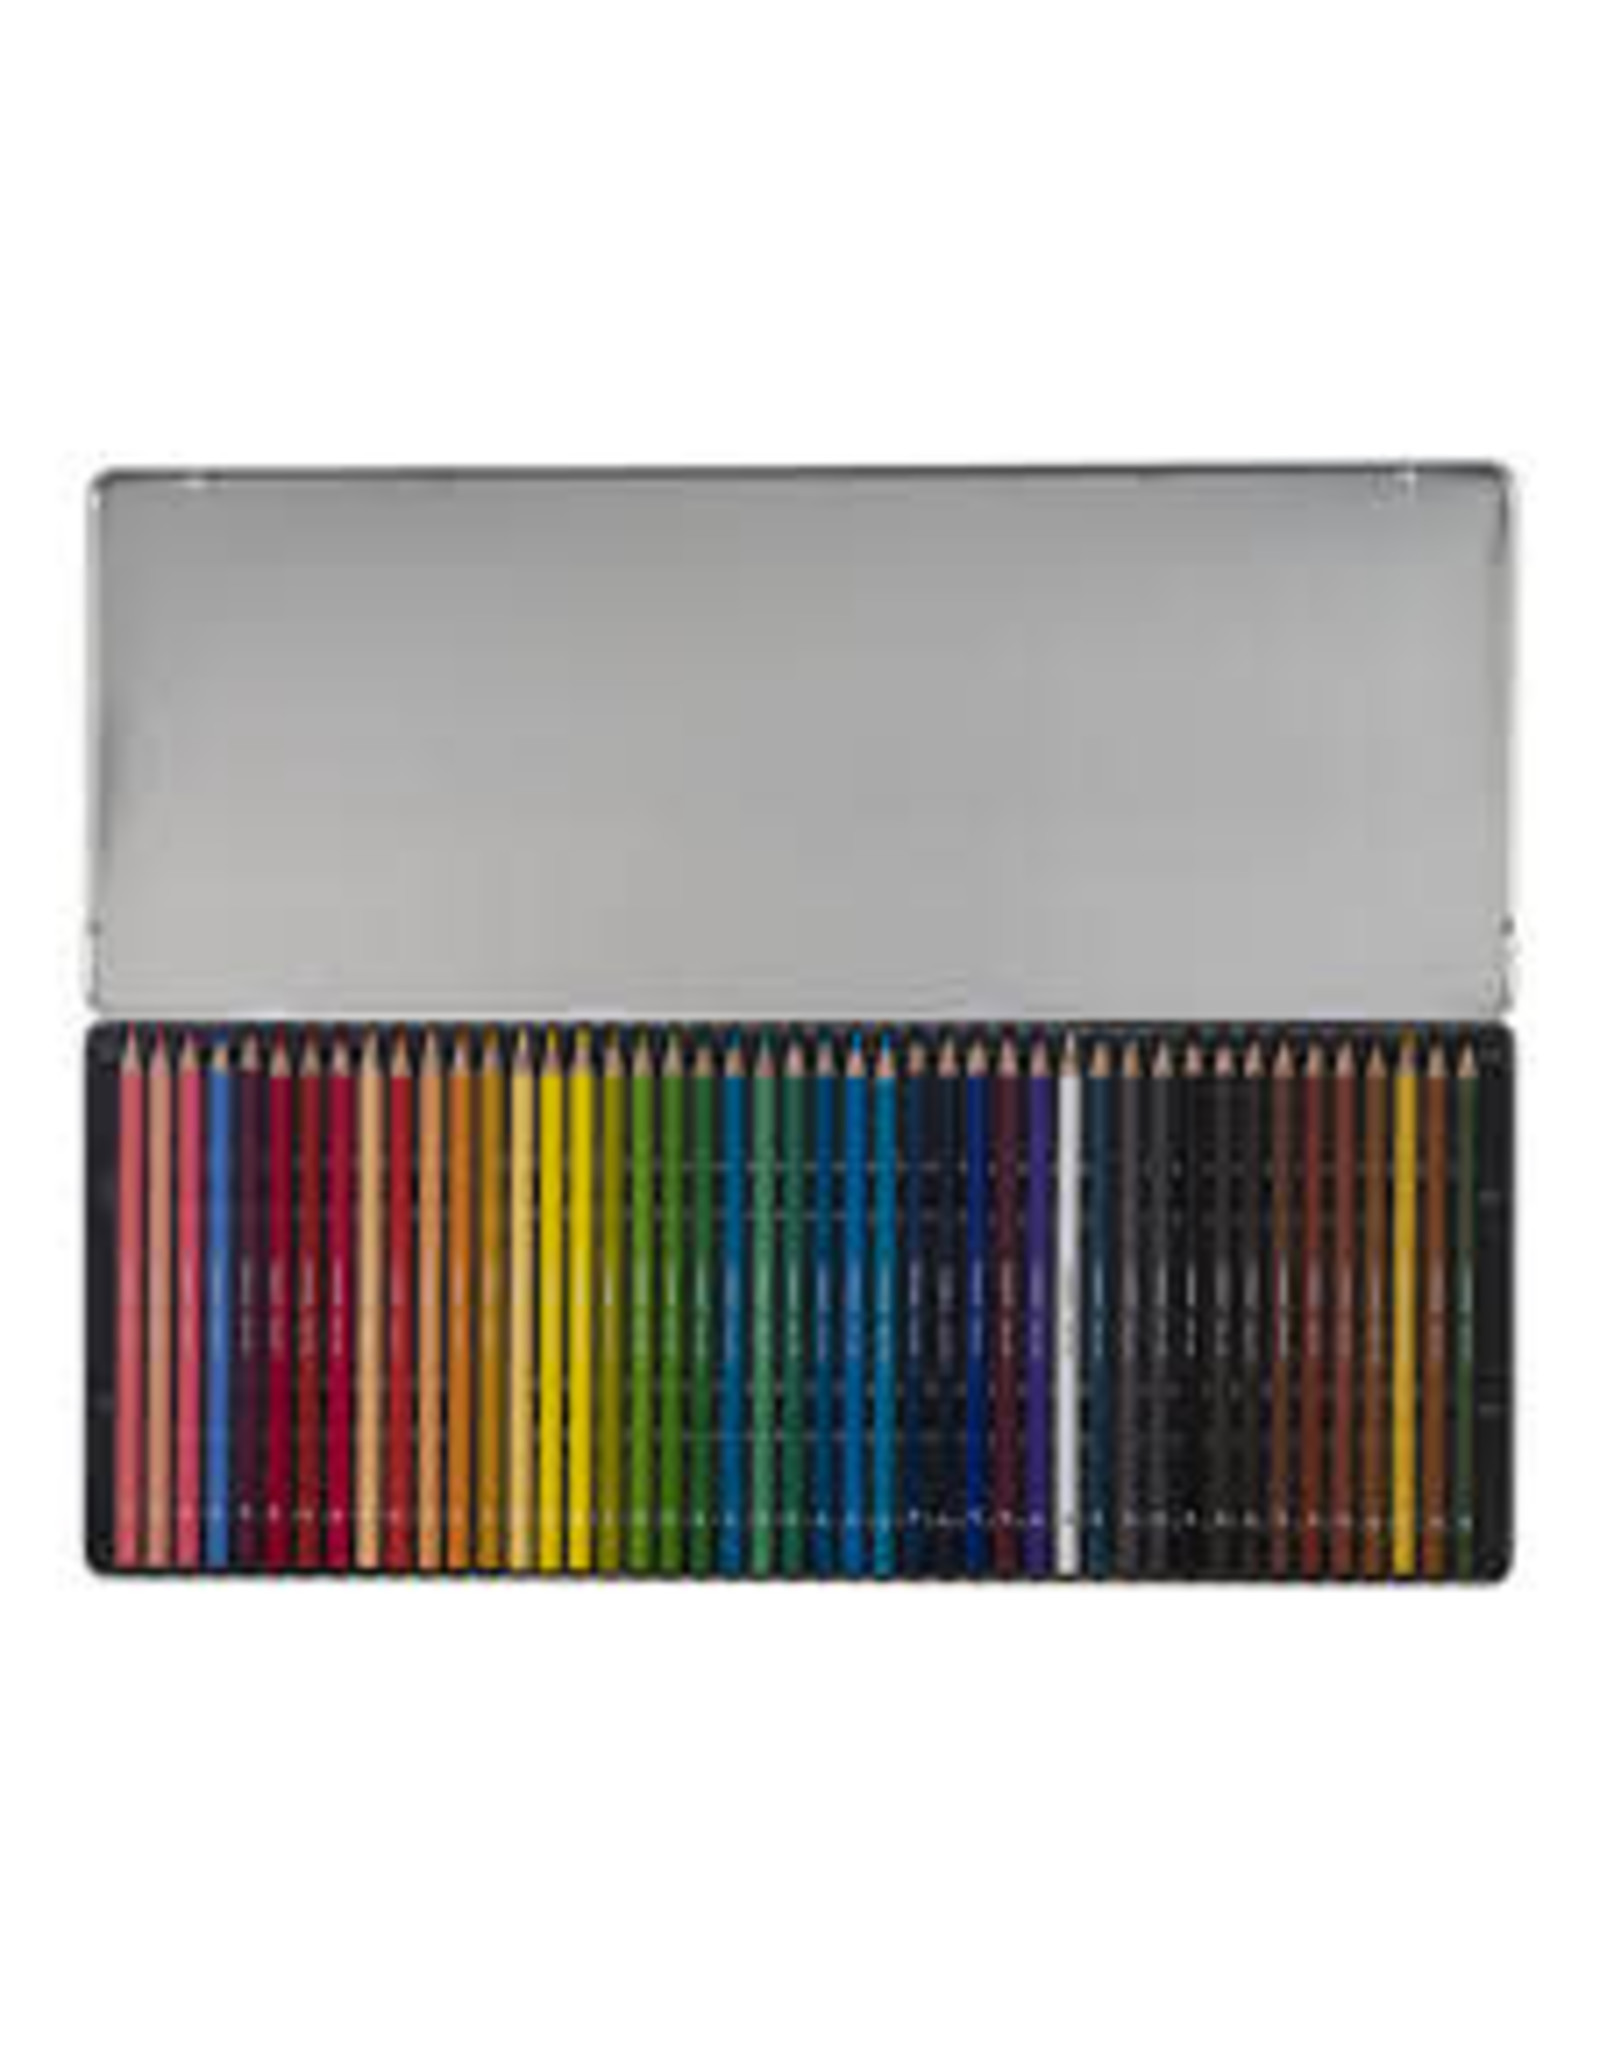 Royal Talens Bruynzeel Coloured Pencil Holland Set of 45